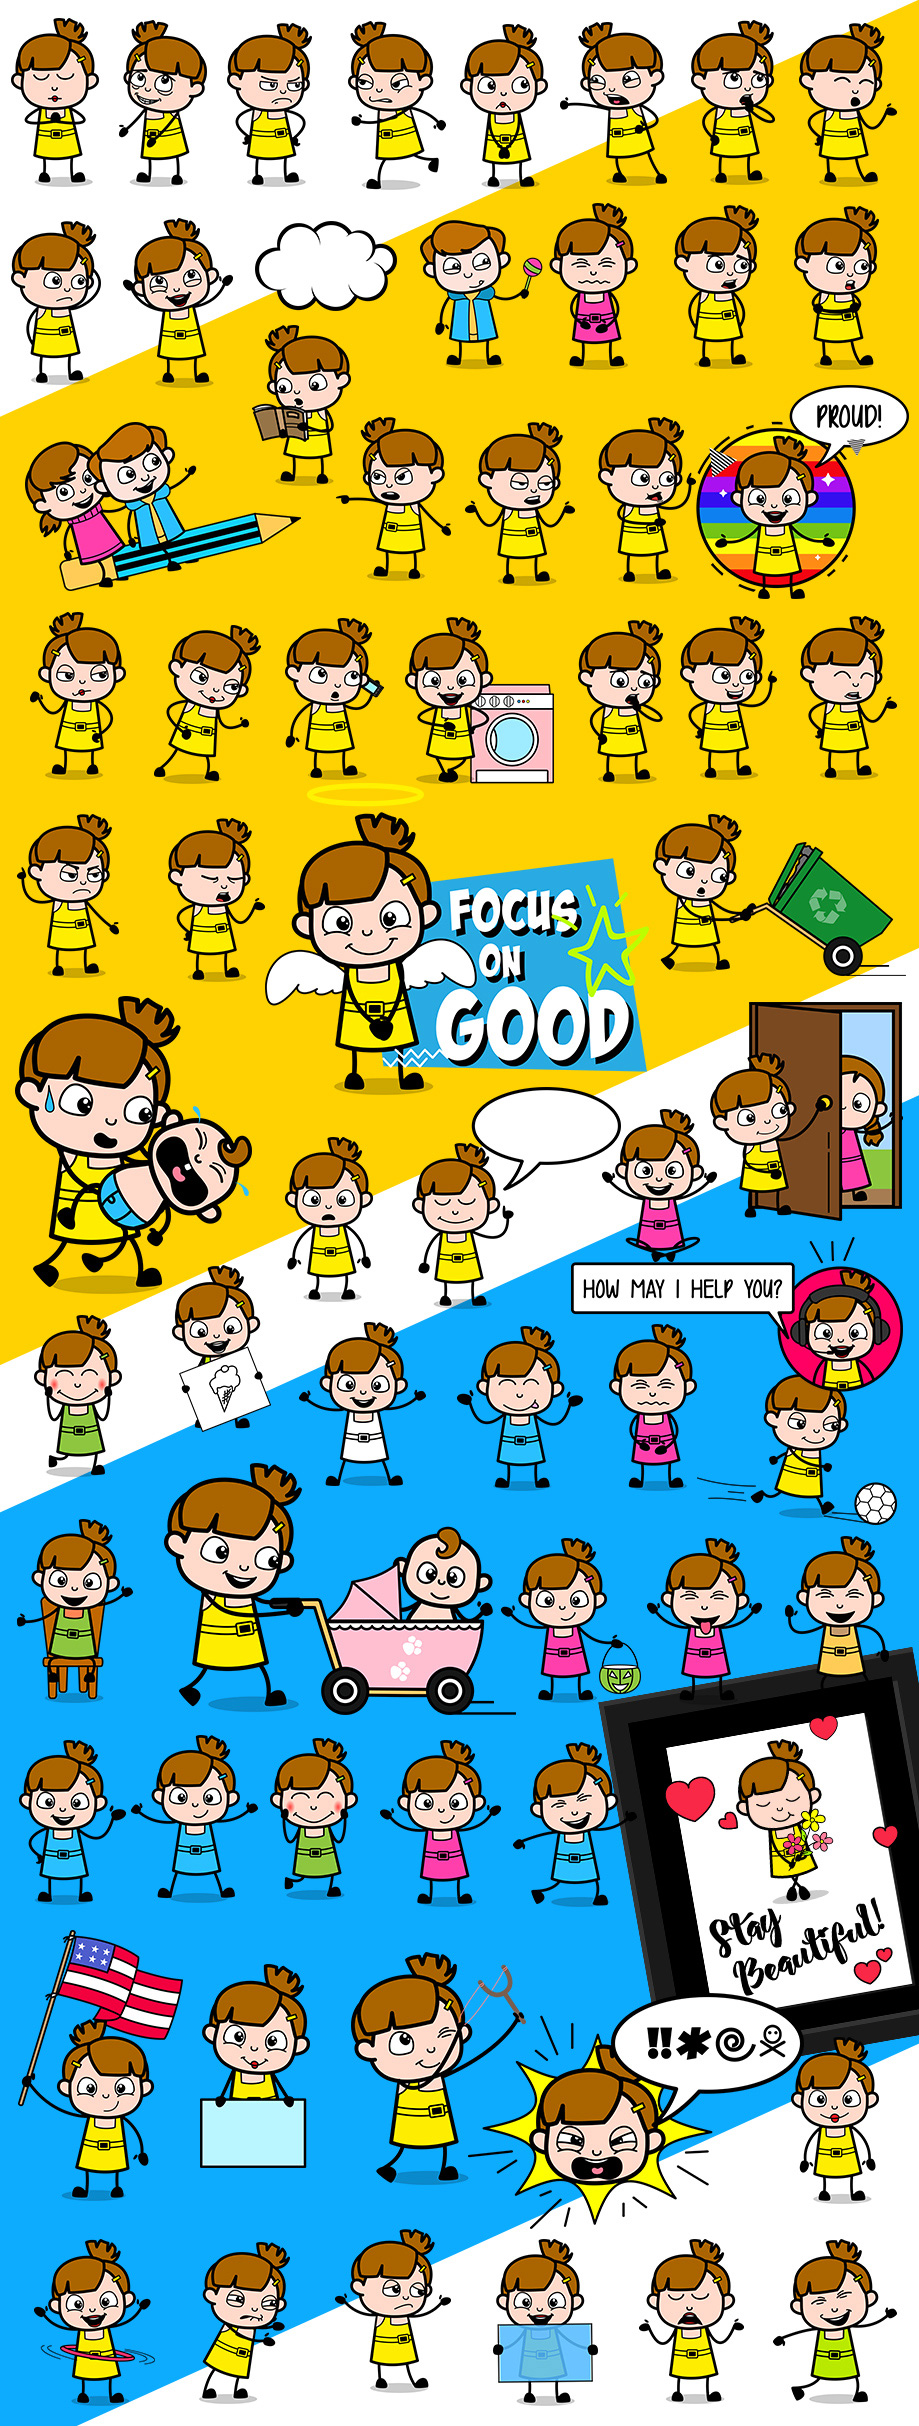 Positive Doodles Images Stock Photos Vectors Shutterstock